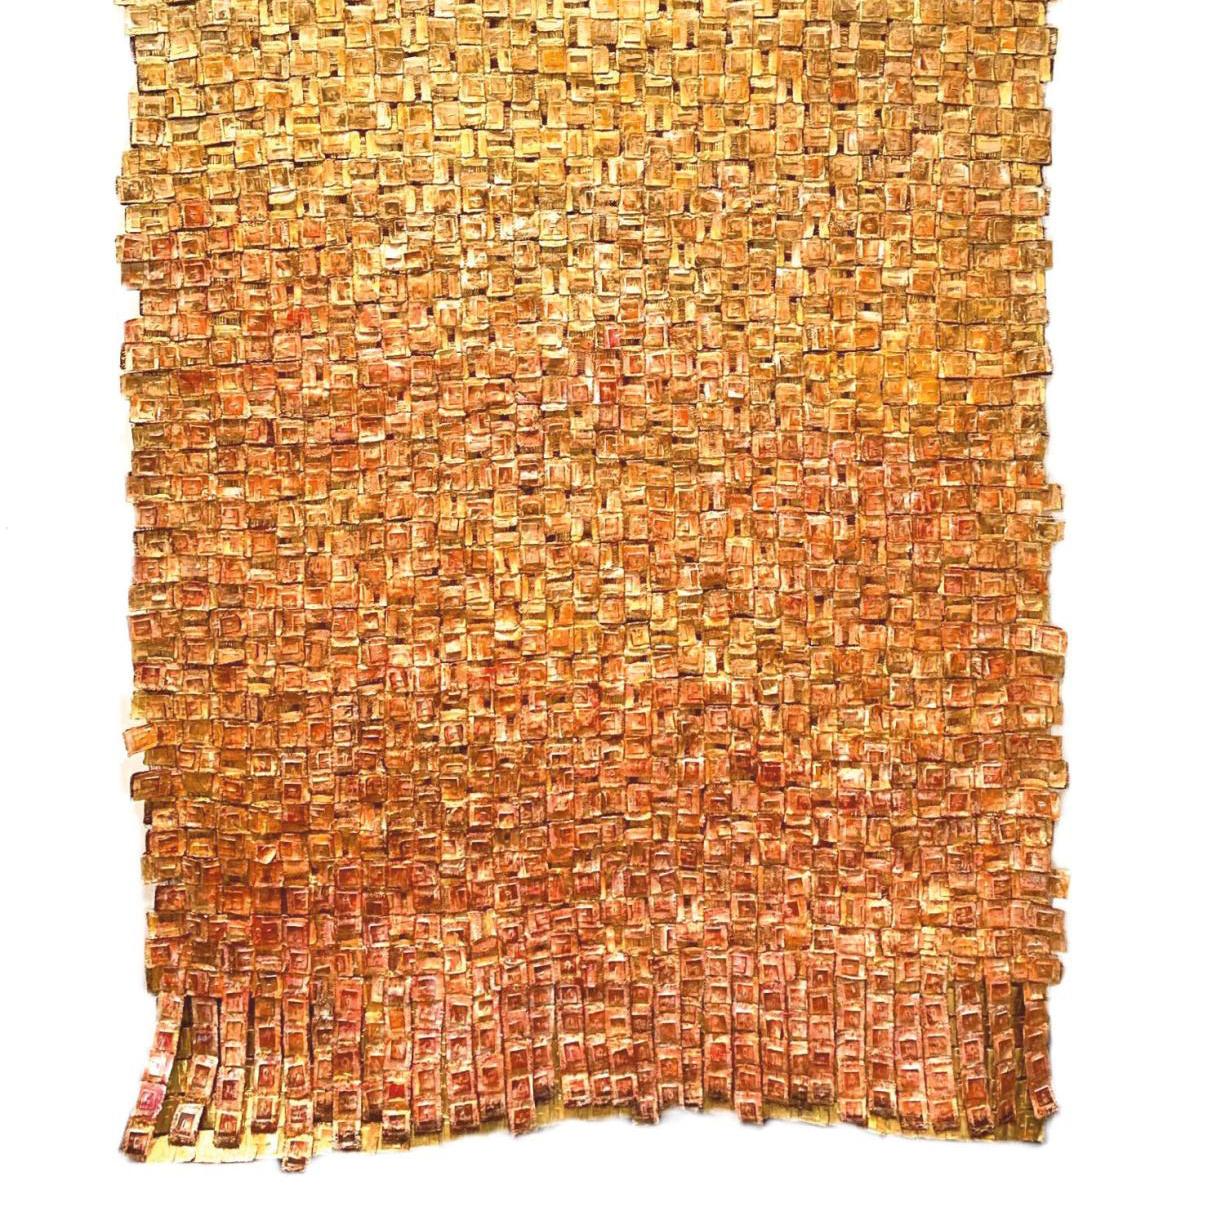 Olga de Amaral’s Textiles: Halfway Between Colombian Crafts and Contemporary Art